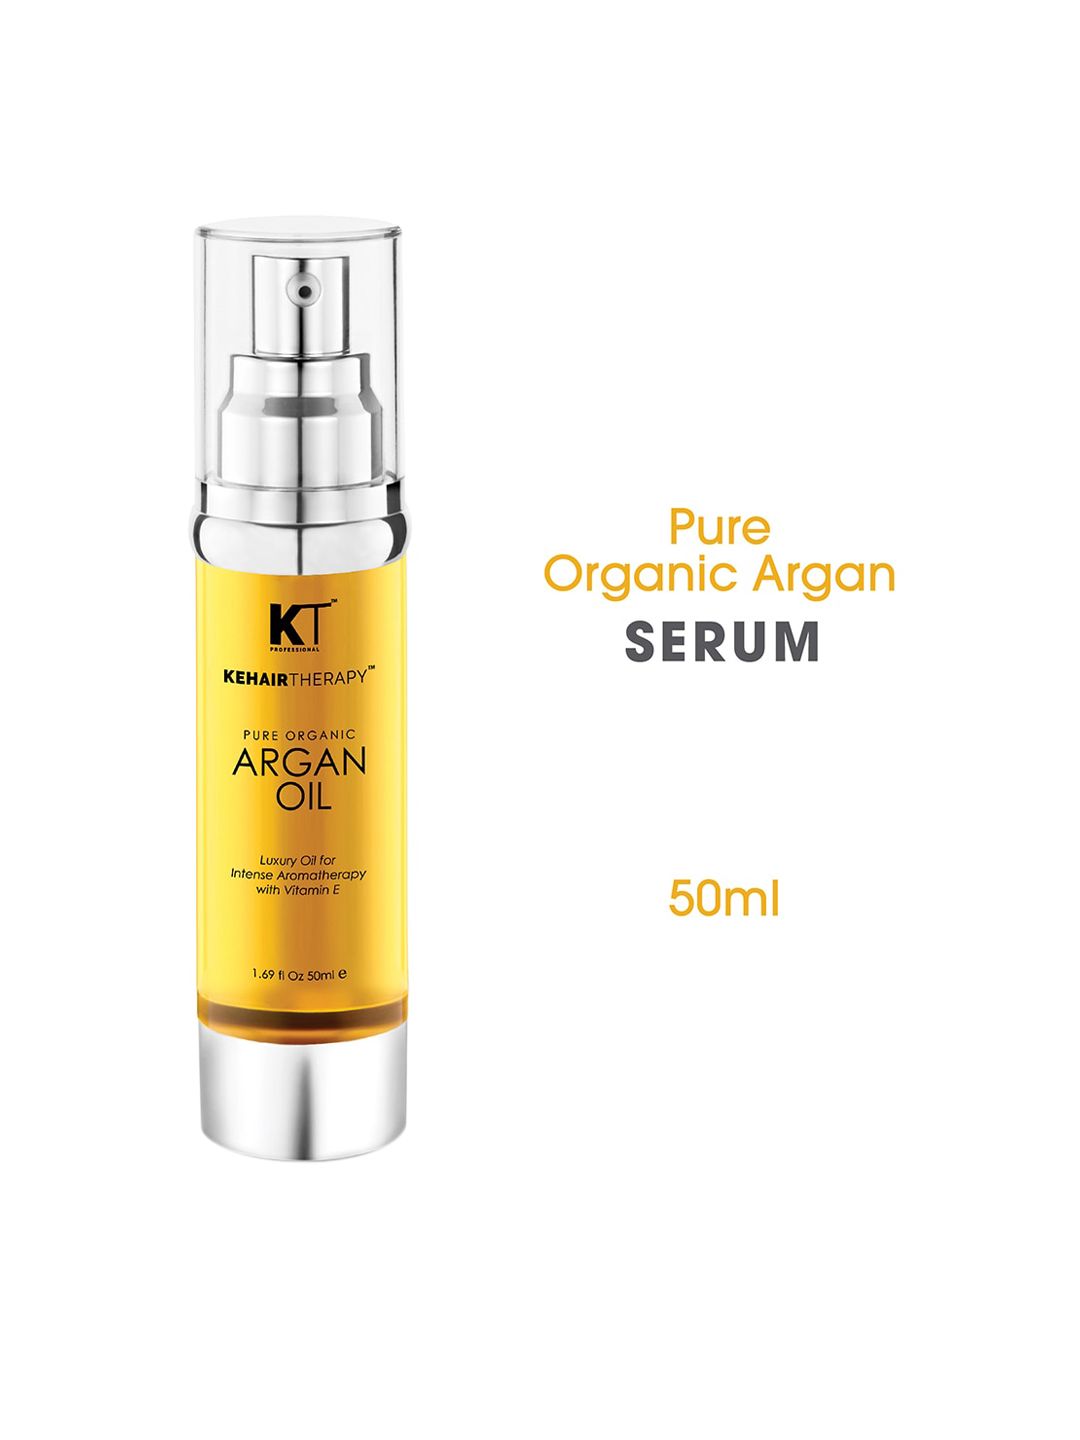 KT Professional Kehairtherapy Pure Organic Argan Hair Oil & Serum - 50 ml Price in India